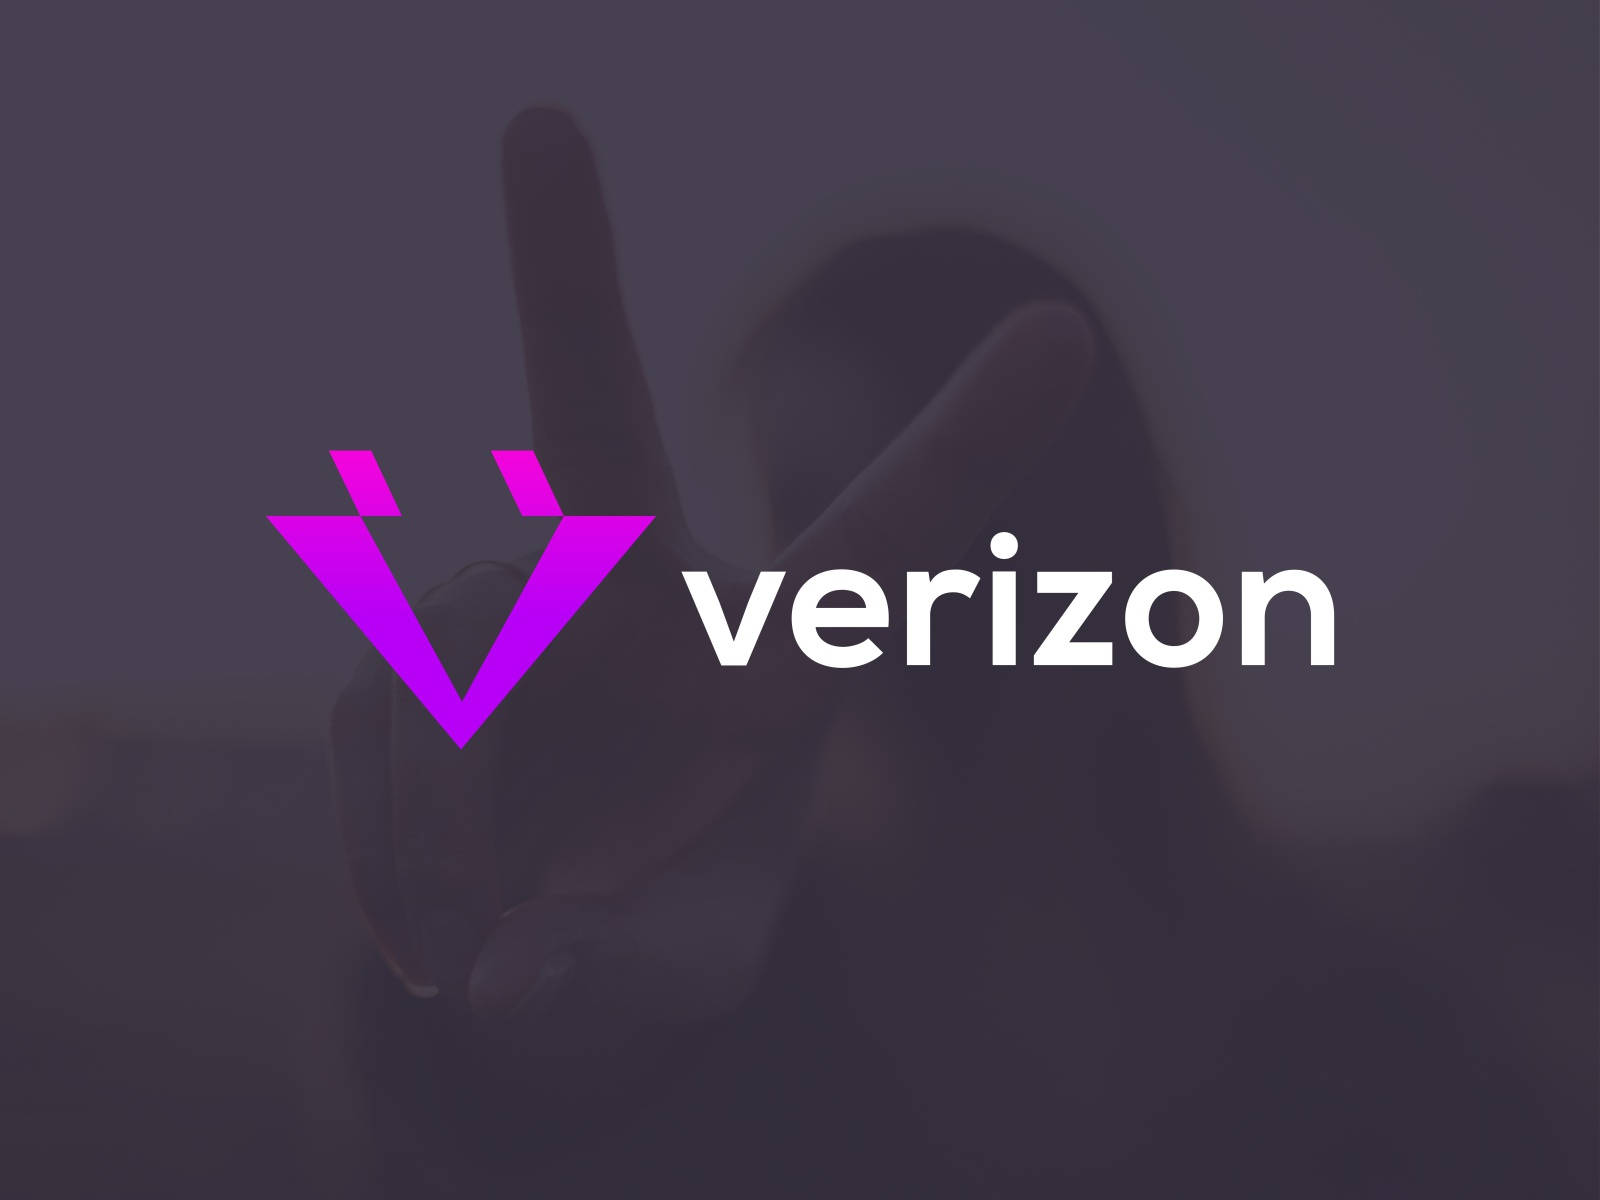 Verizon Purple Design Background